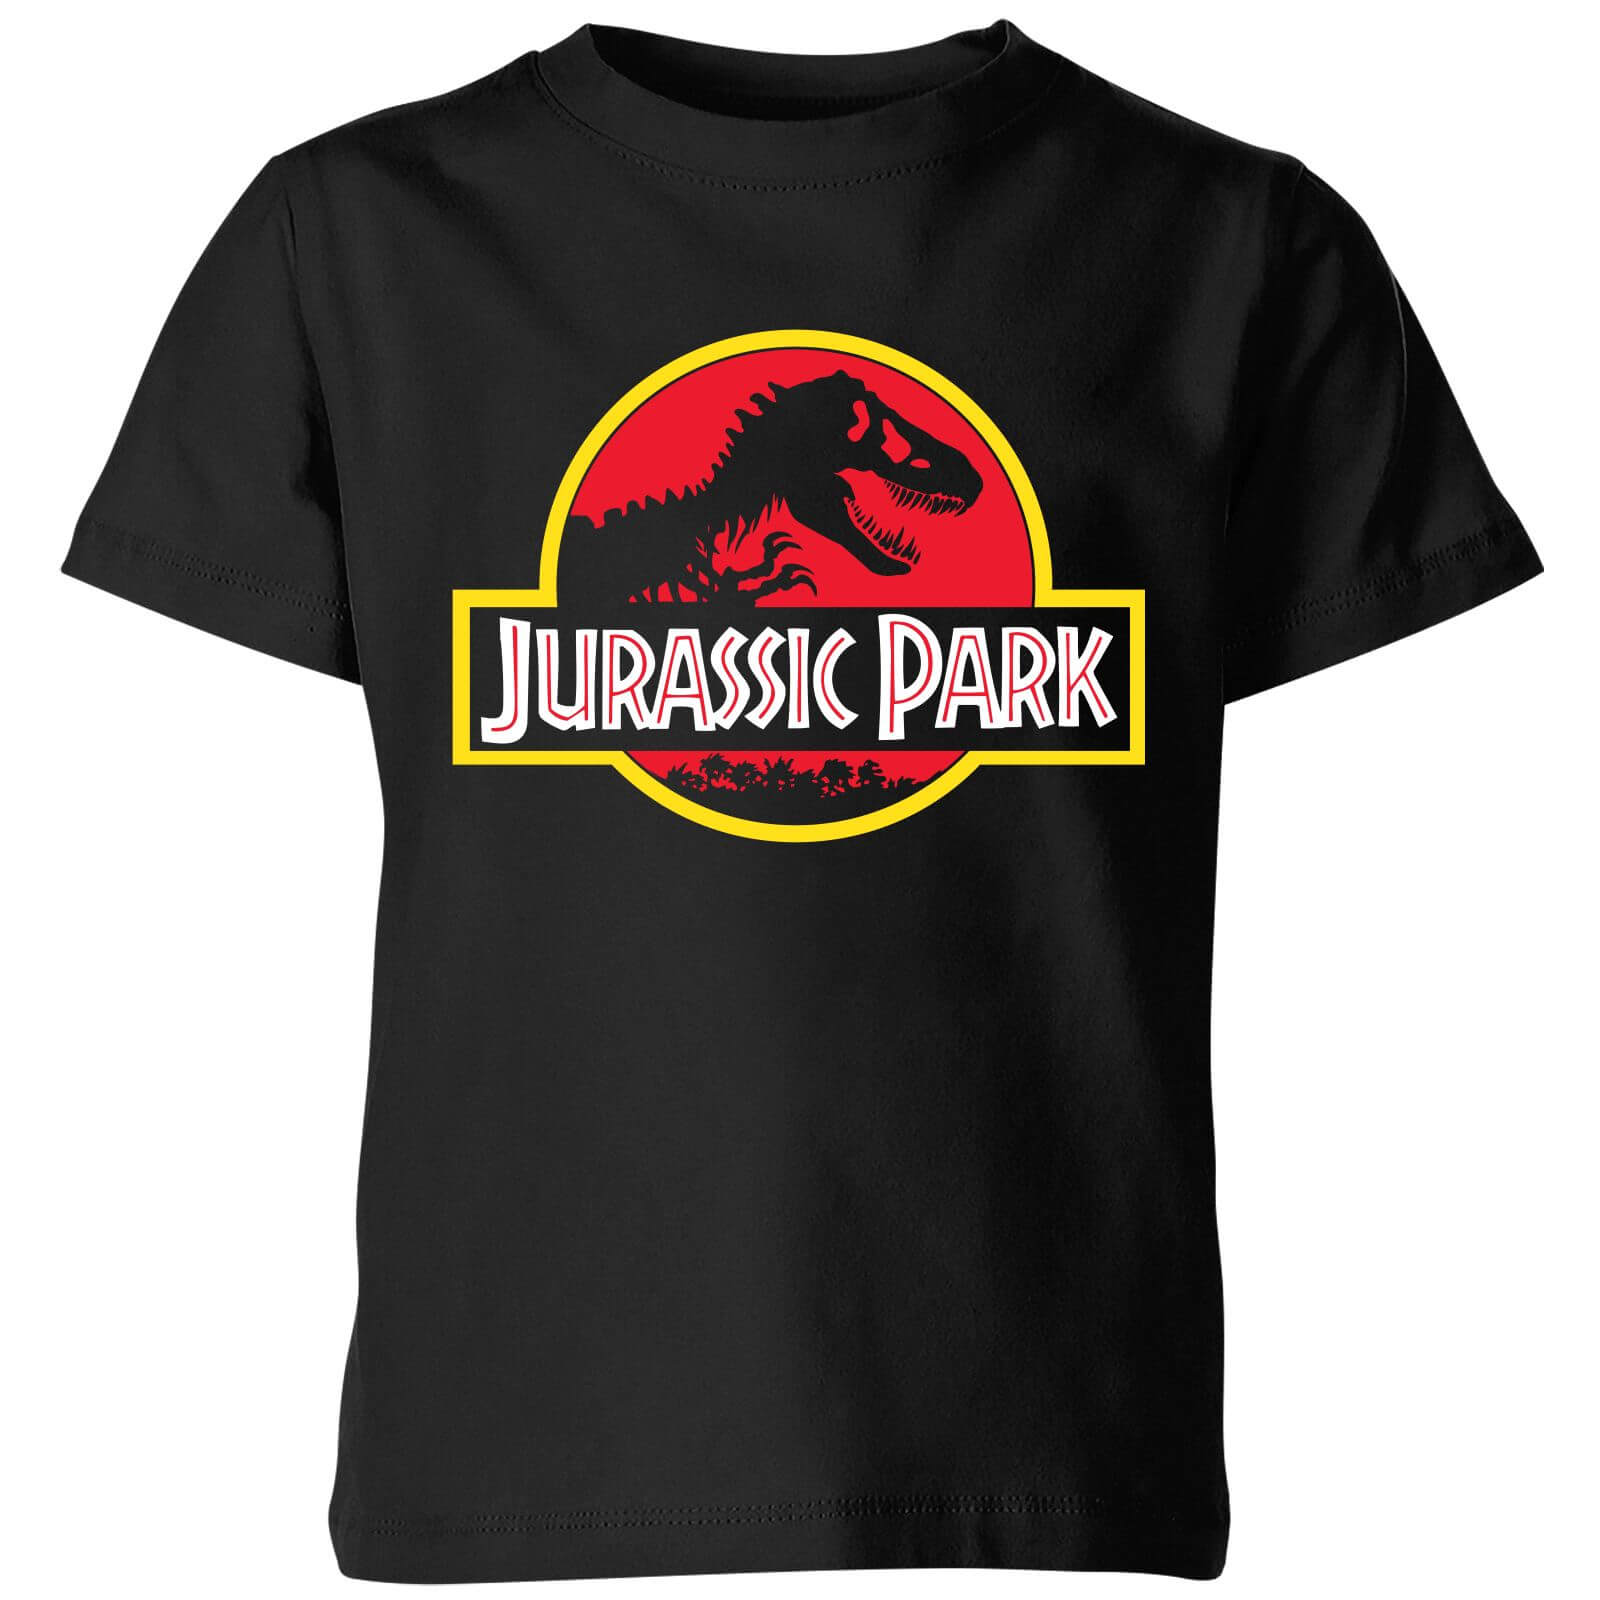 Jurassic Park Classic Jurassic Park Logo Kids' T-Shirt - Black - 9-10 Years - Black